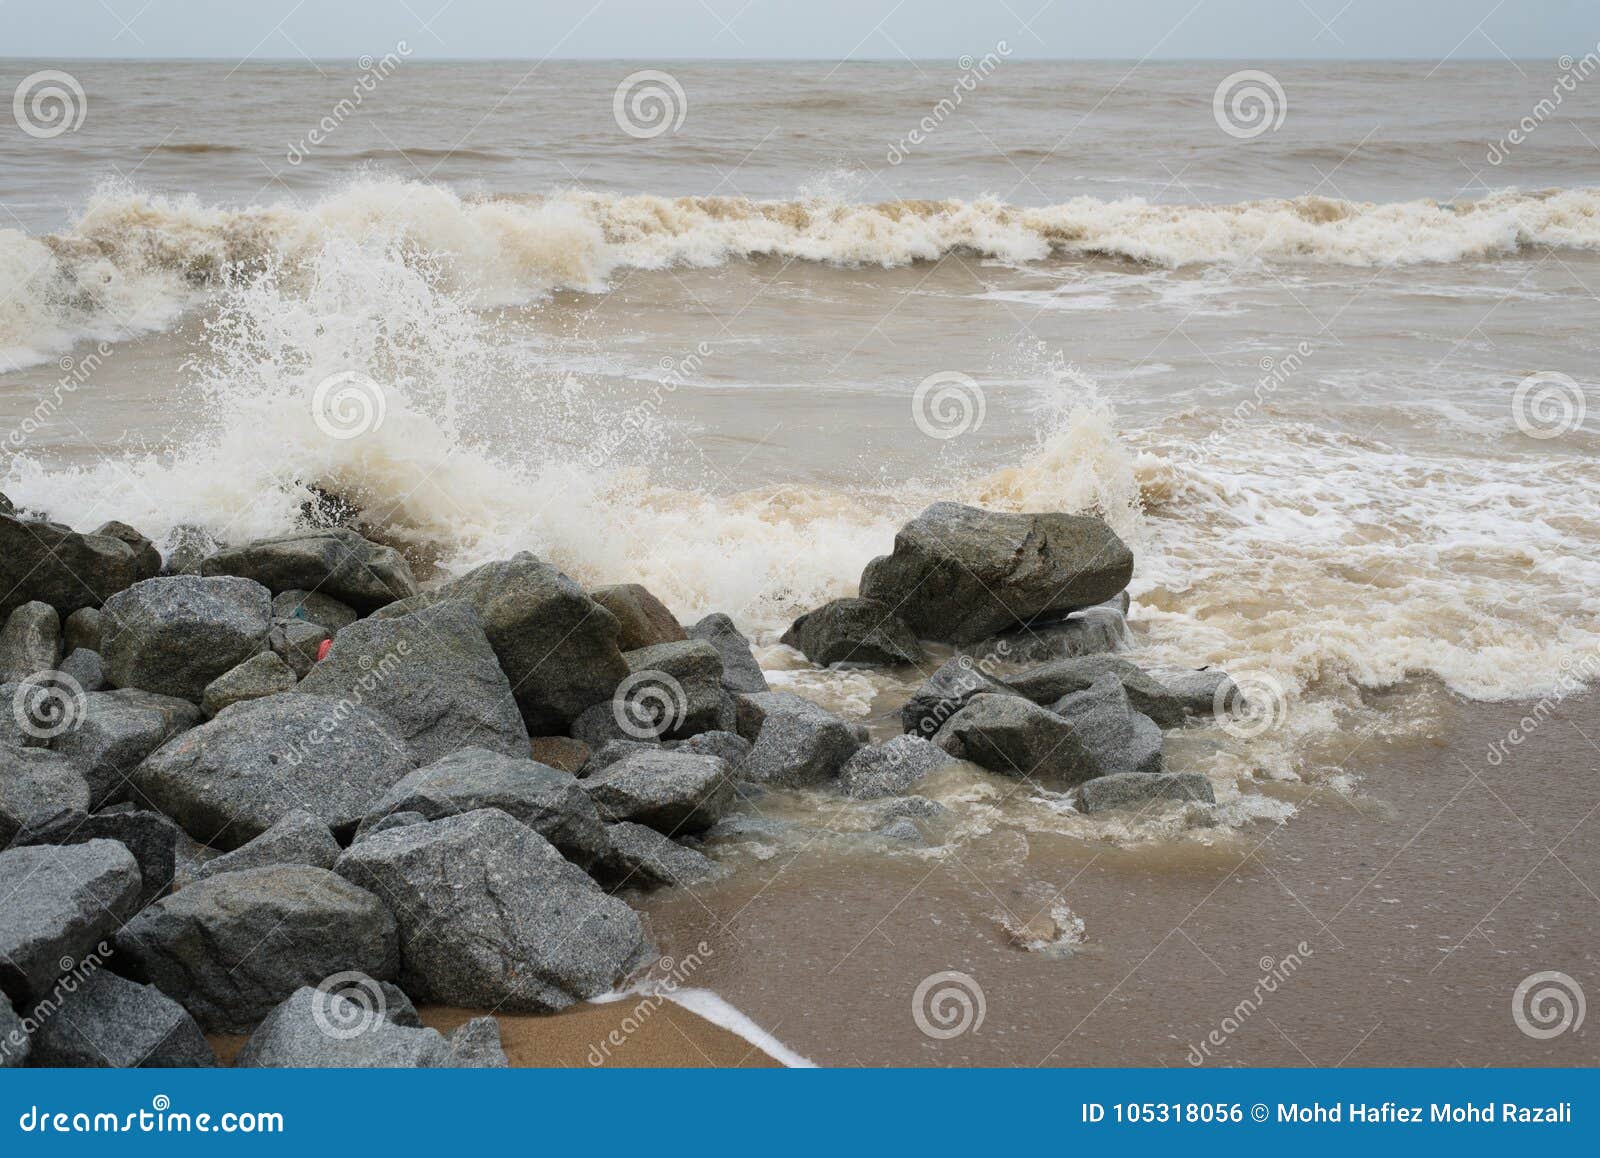 wave and splashes on beach of pantai cinta berahi,kelantan,malaysia